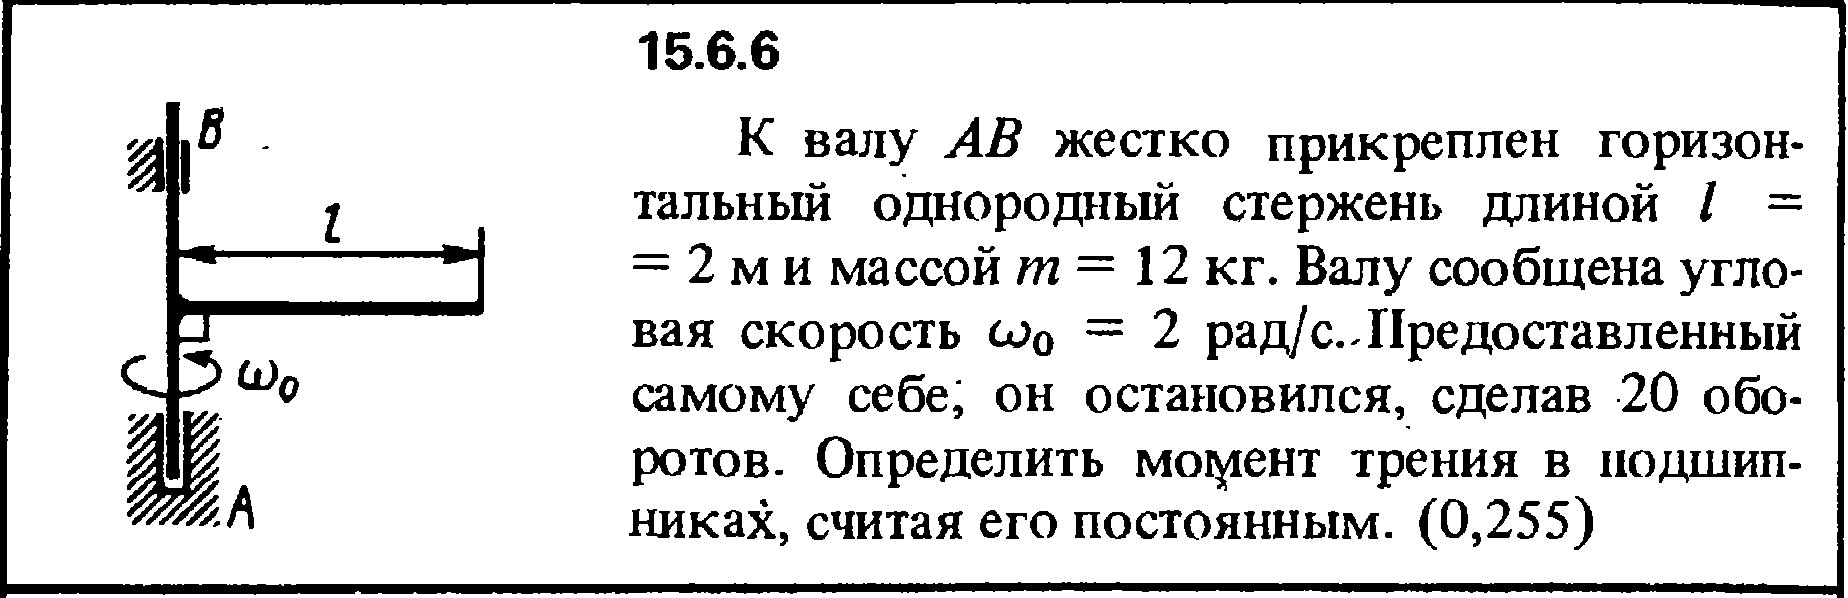 Решение задачи 15.6.6 из сборника Кепе О.Е. 1989 года